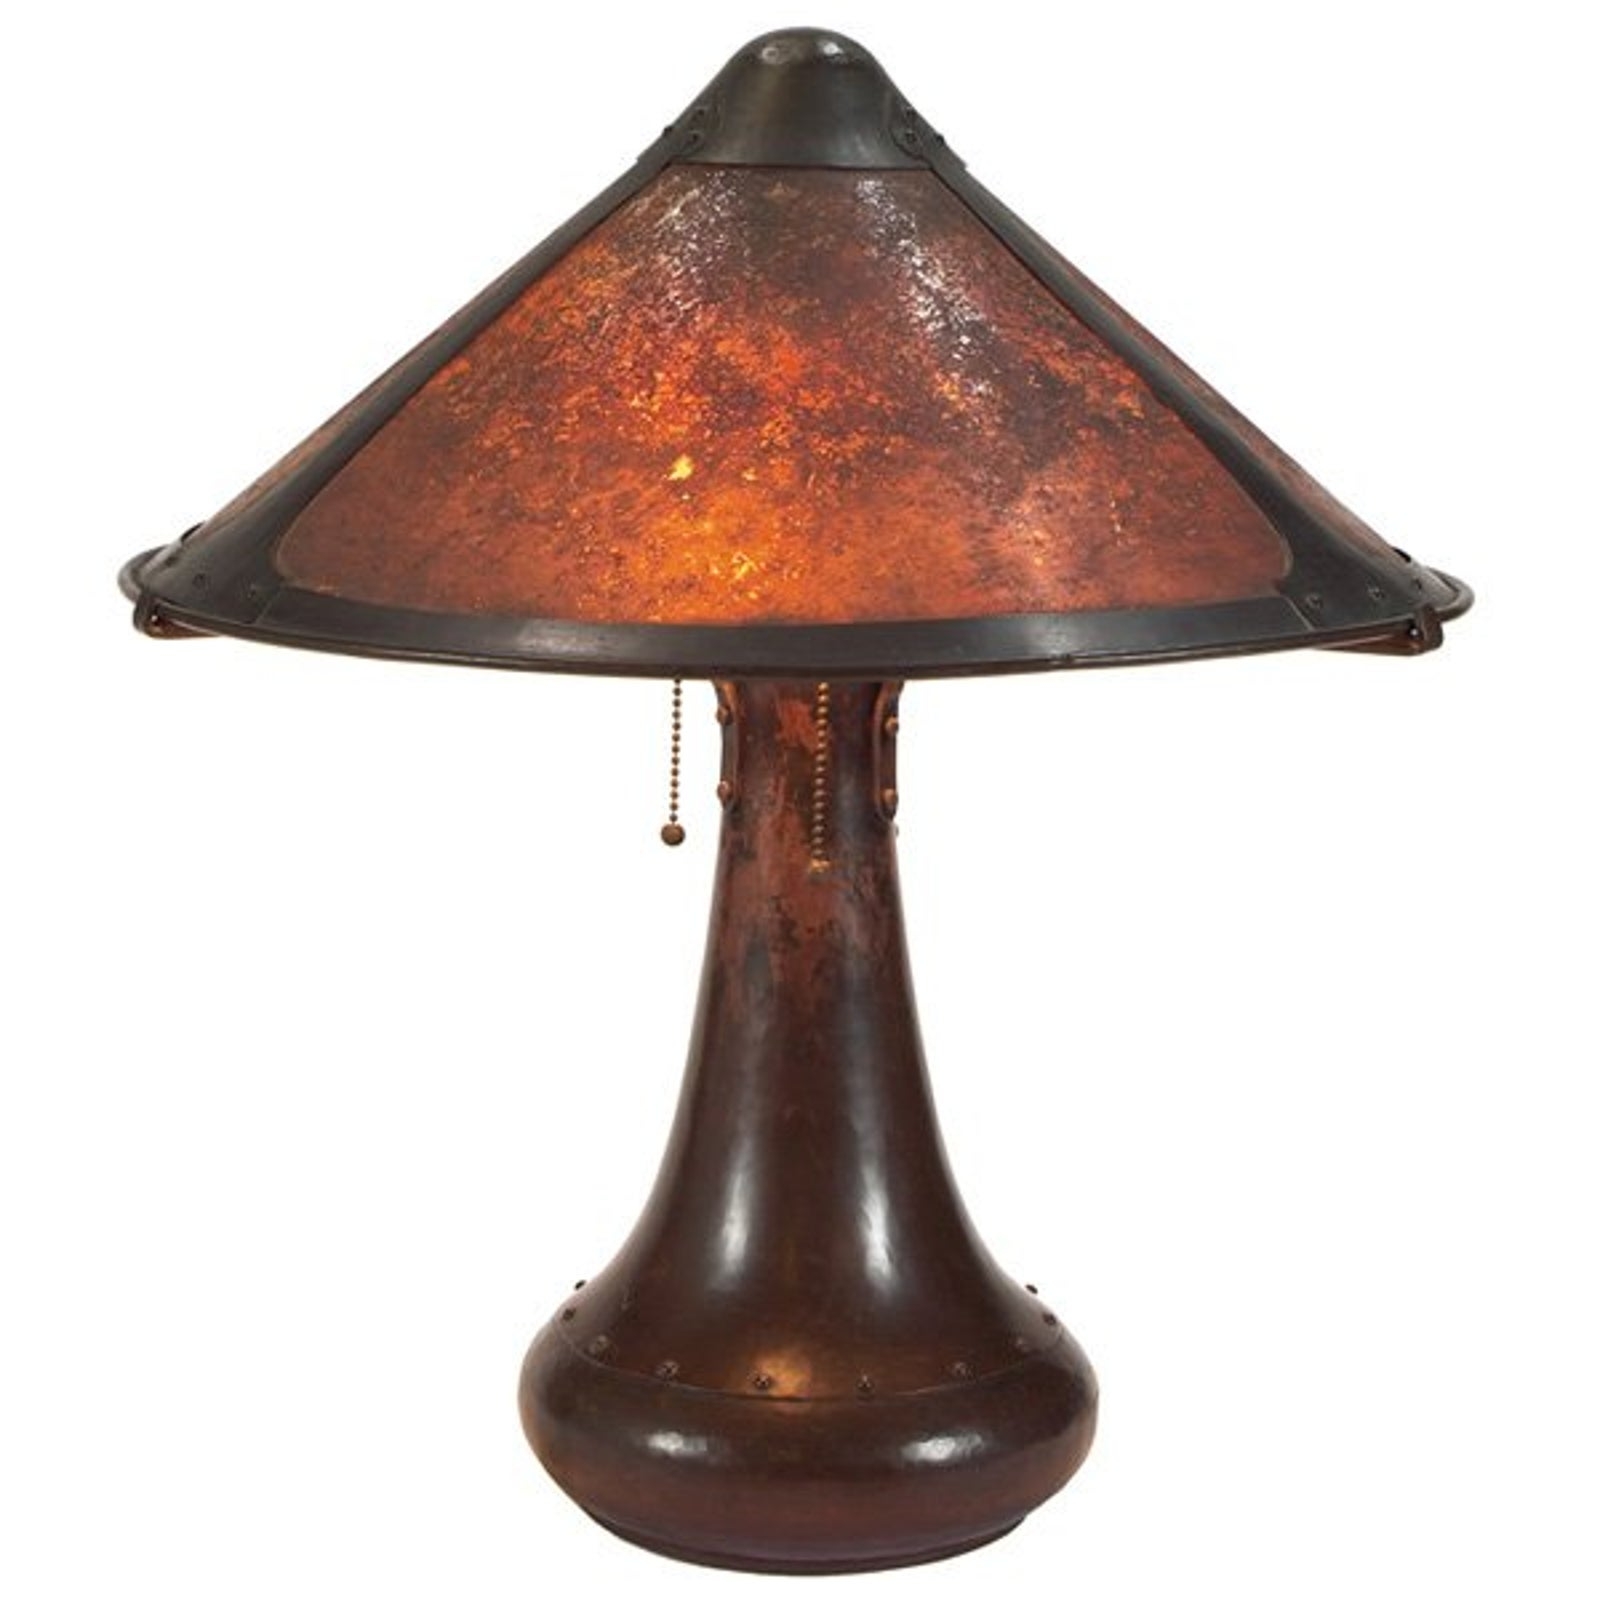 Dirk van erp table lamp hammered copper